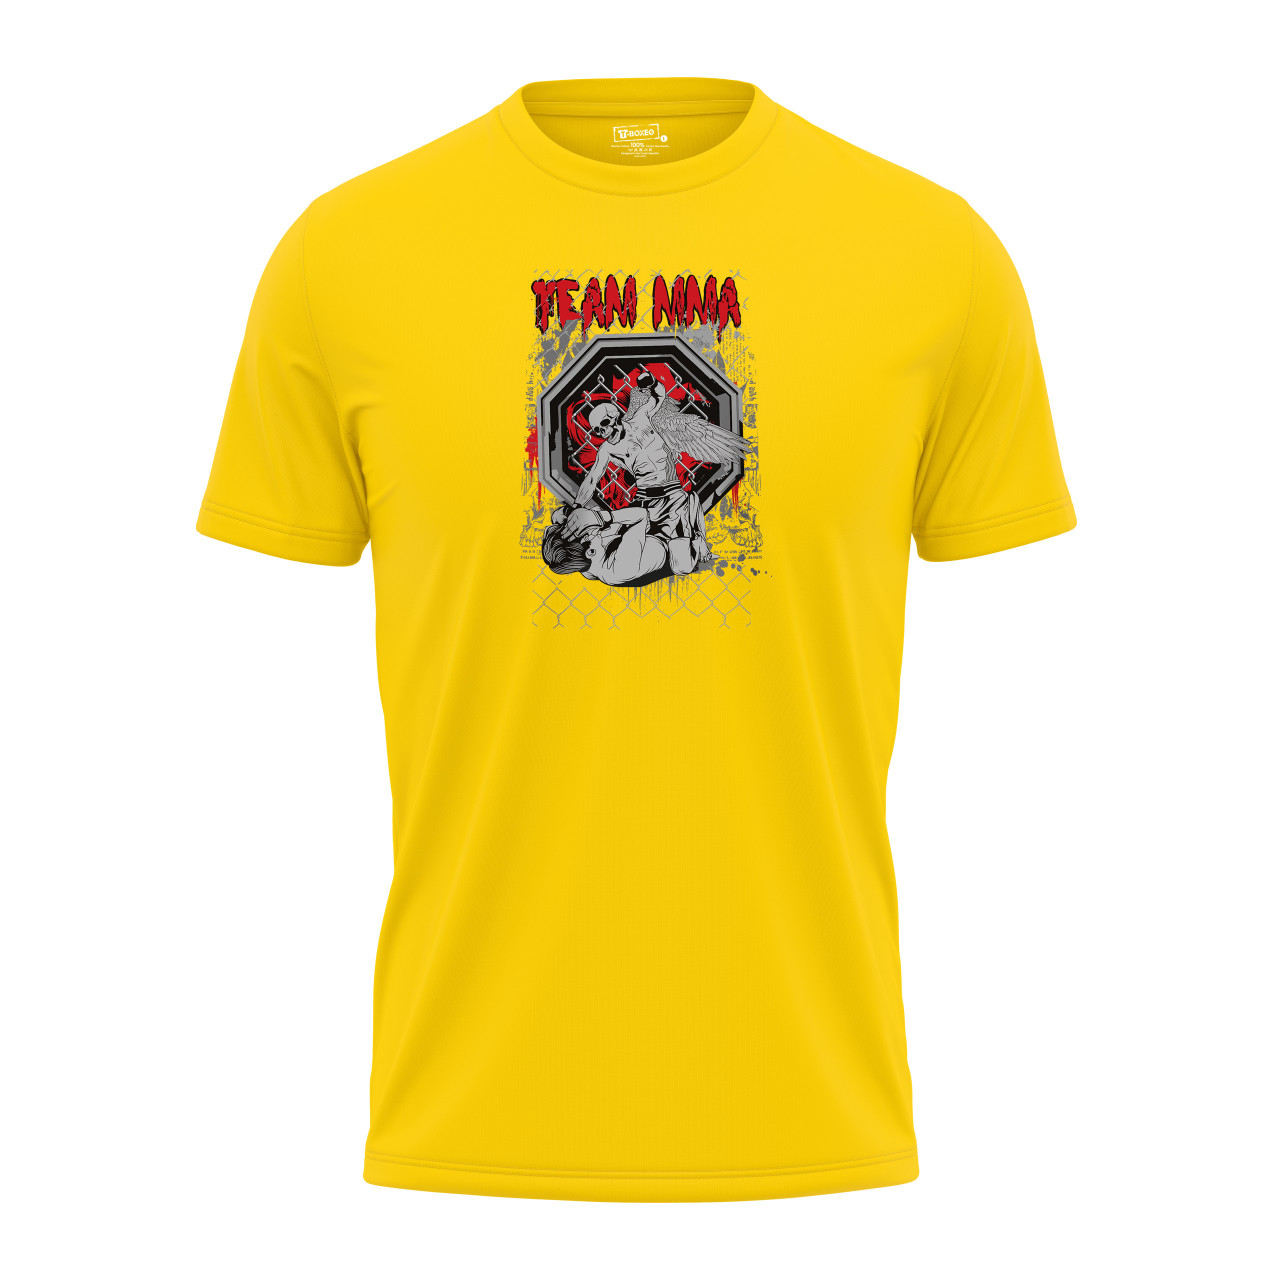 Pánské tričko s potiskem “Team MMA”